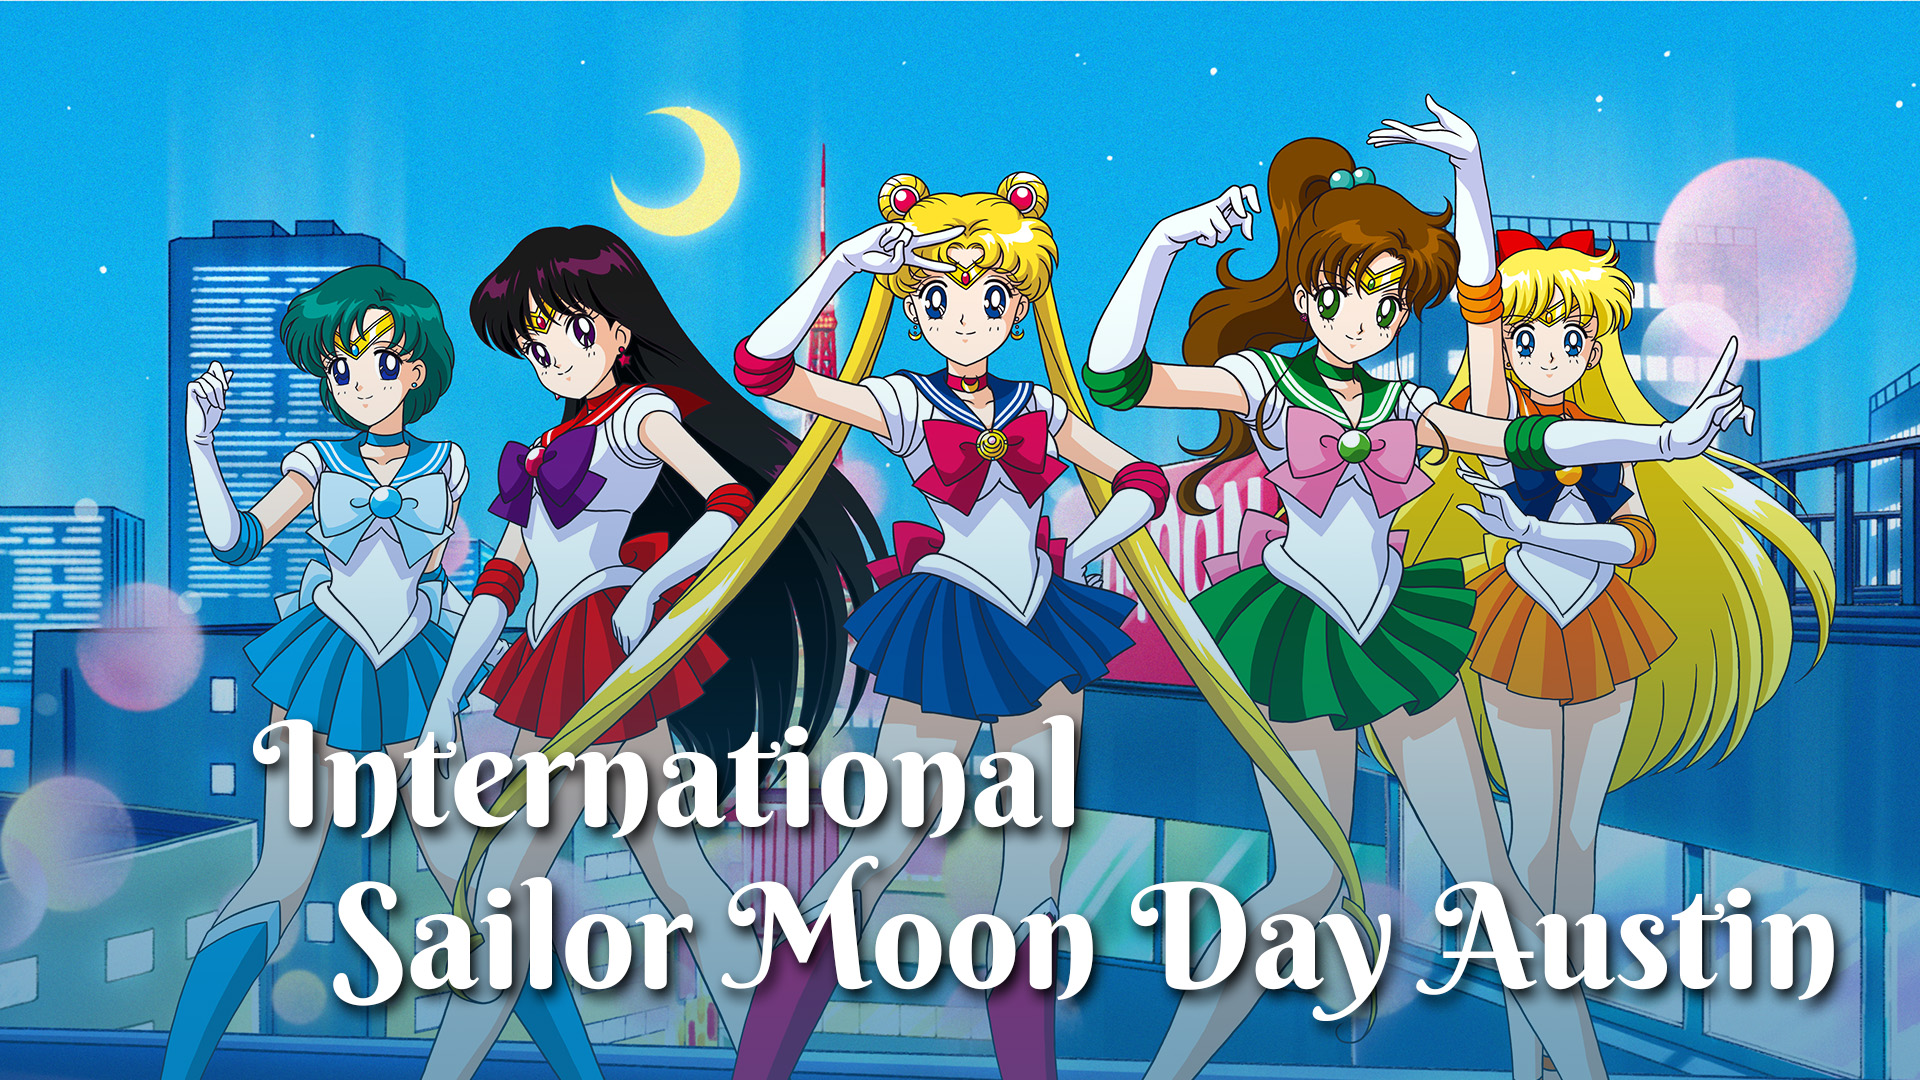 International Sailor Moon Day Austin featured